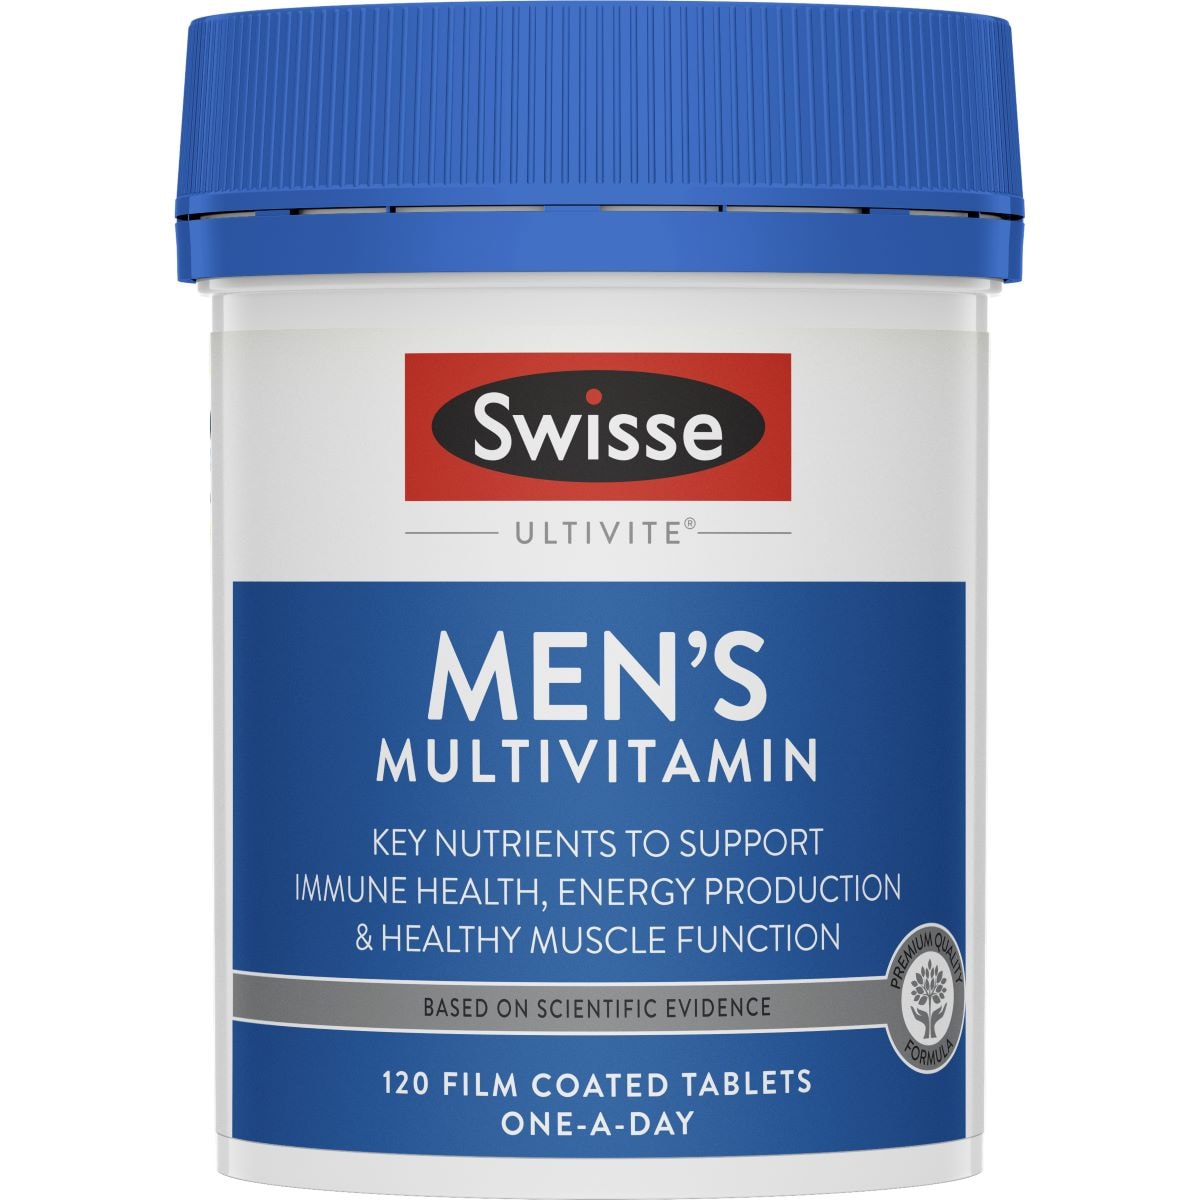 Swisse Ultivite Mens Multivitamin 120 Tablets